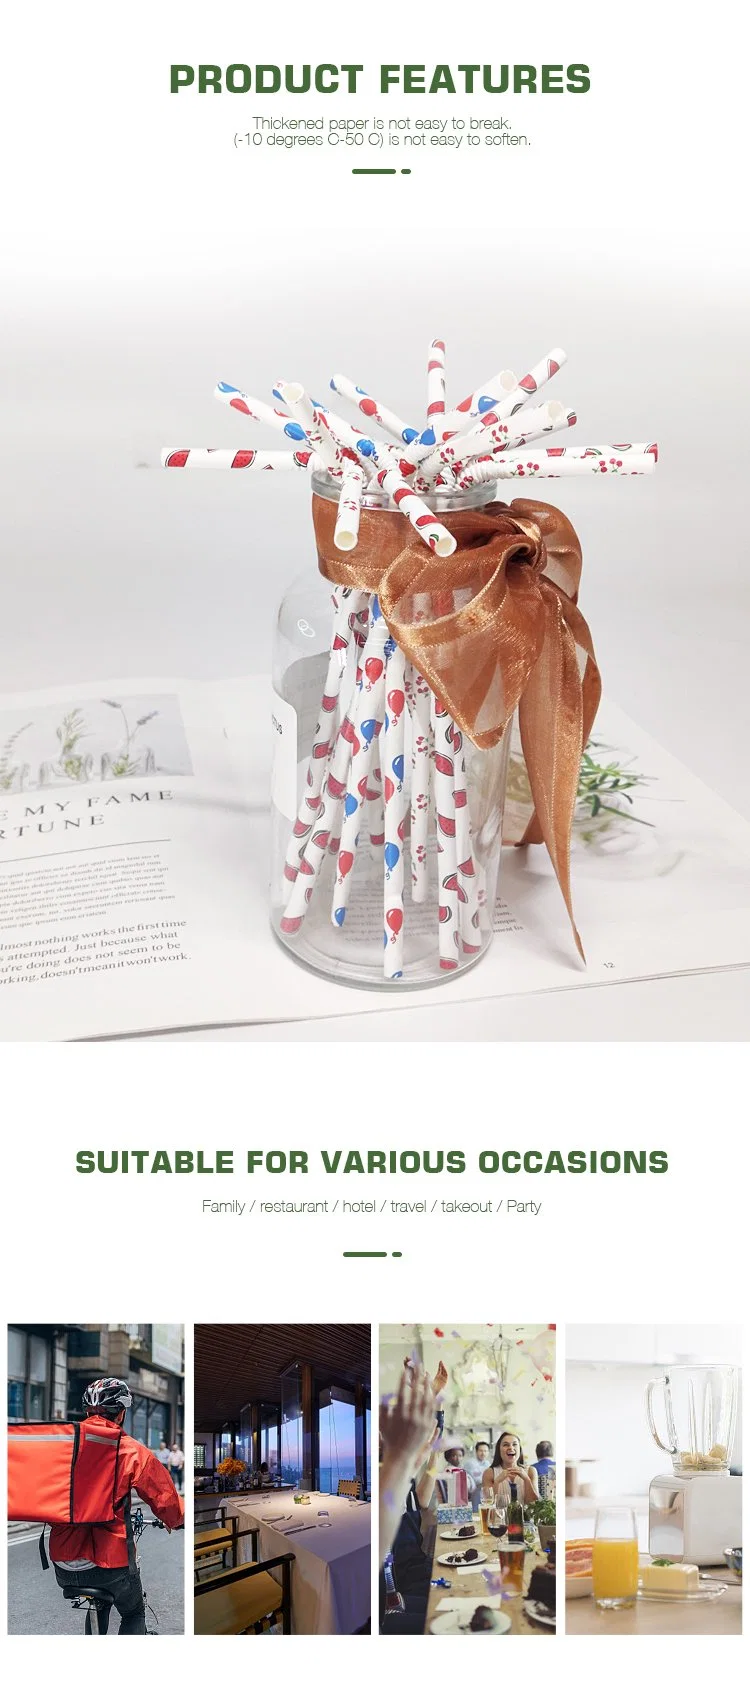 U Shape Folded Custom Printing Disposable Paper Straw Accept Individual Wrap